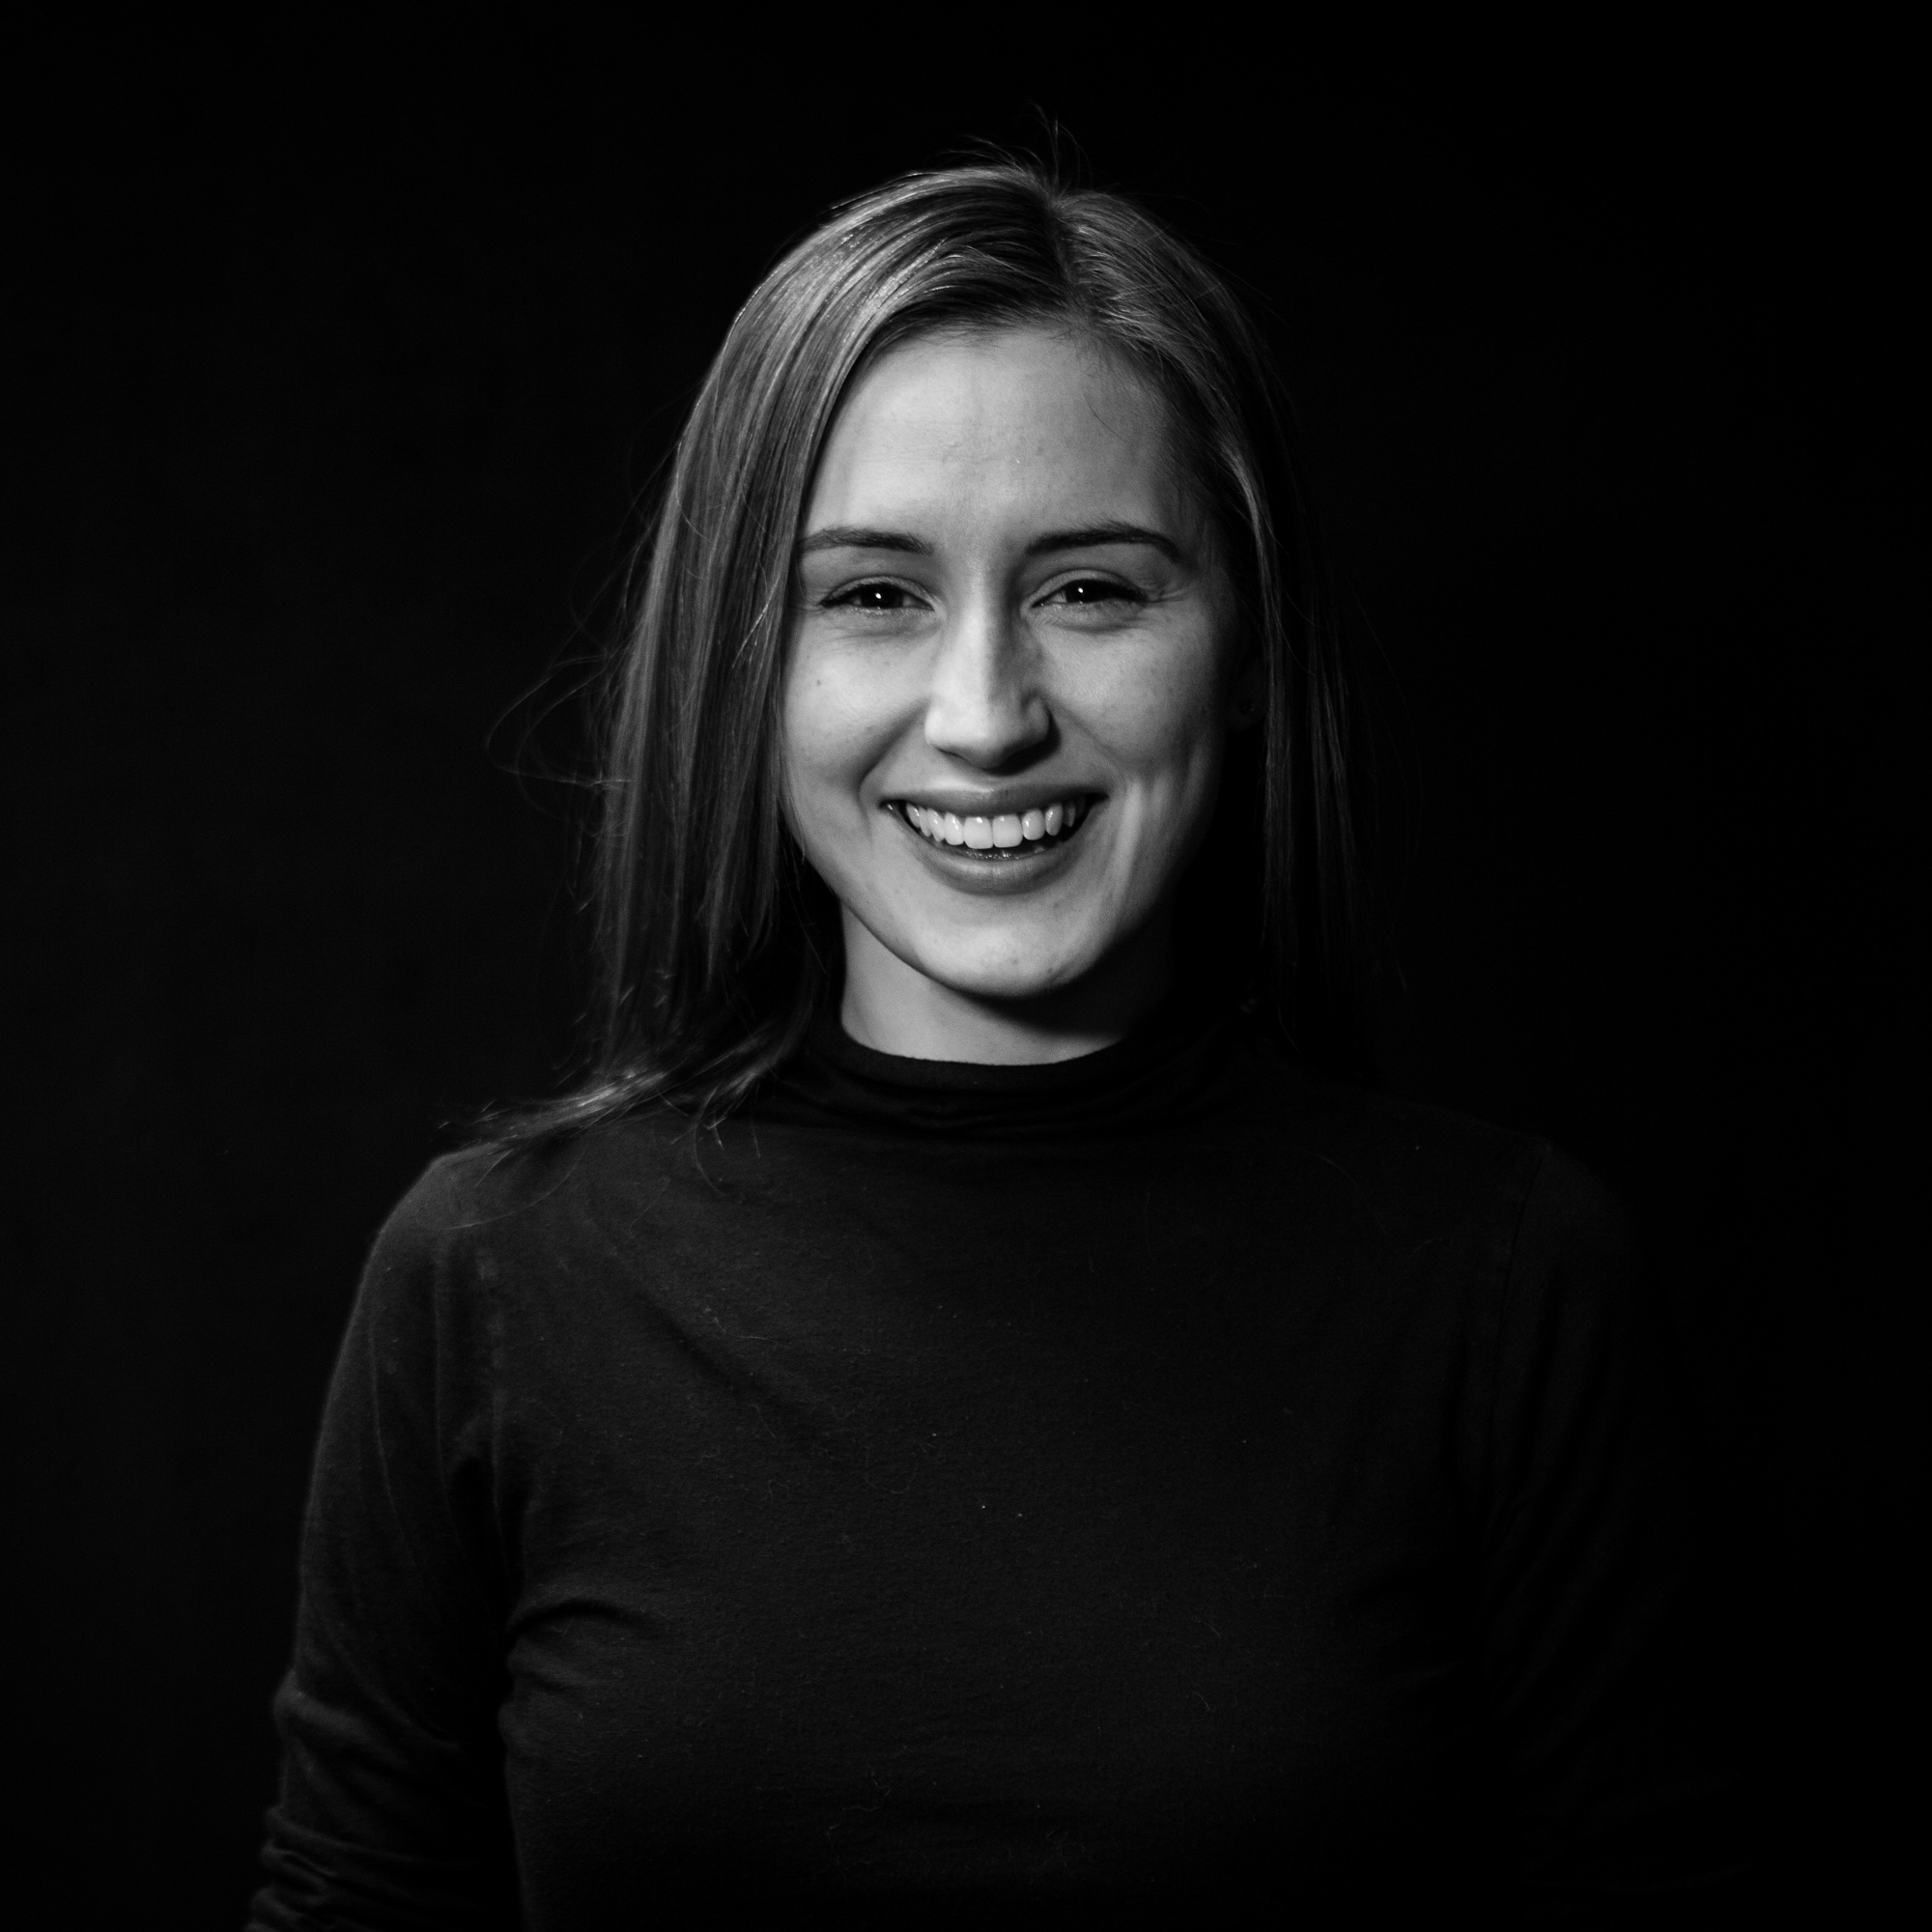 Profile photo of student Sonia Markes